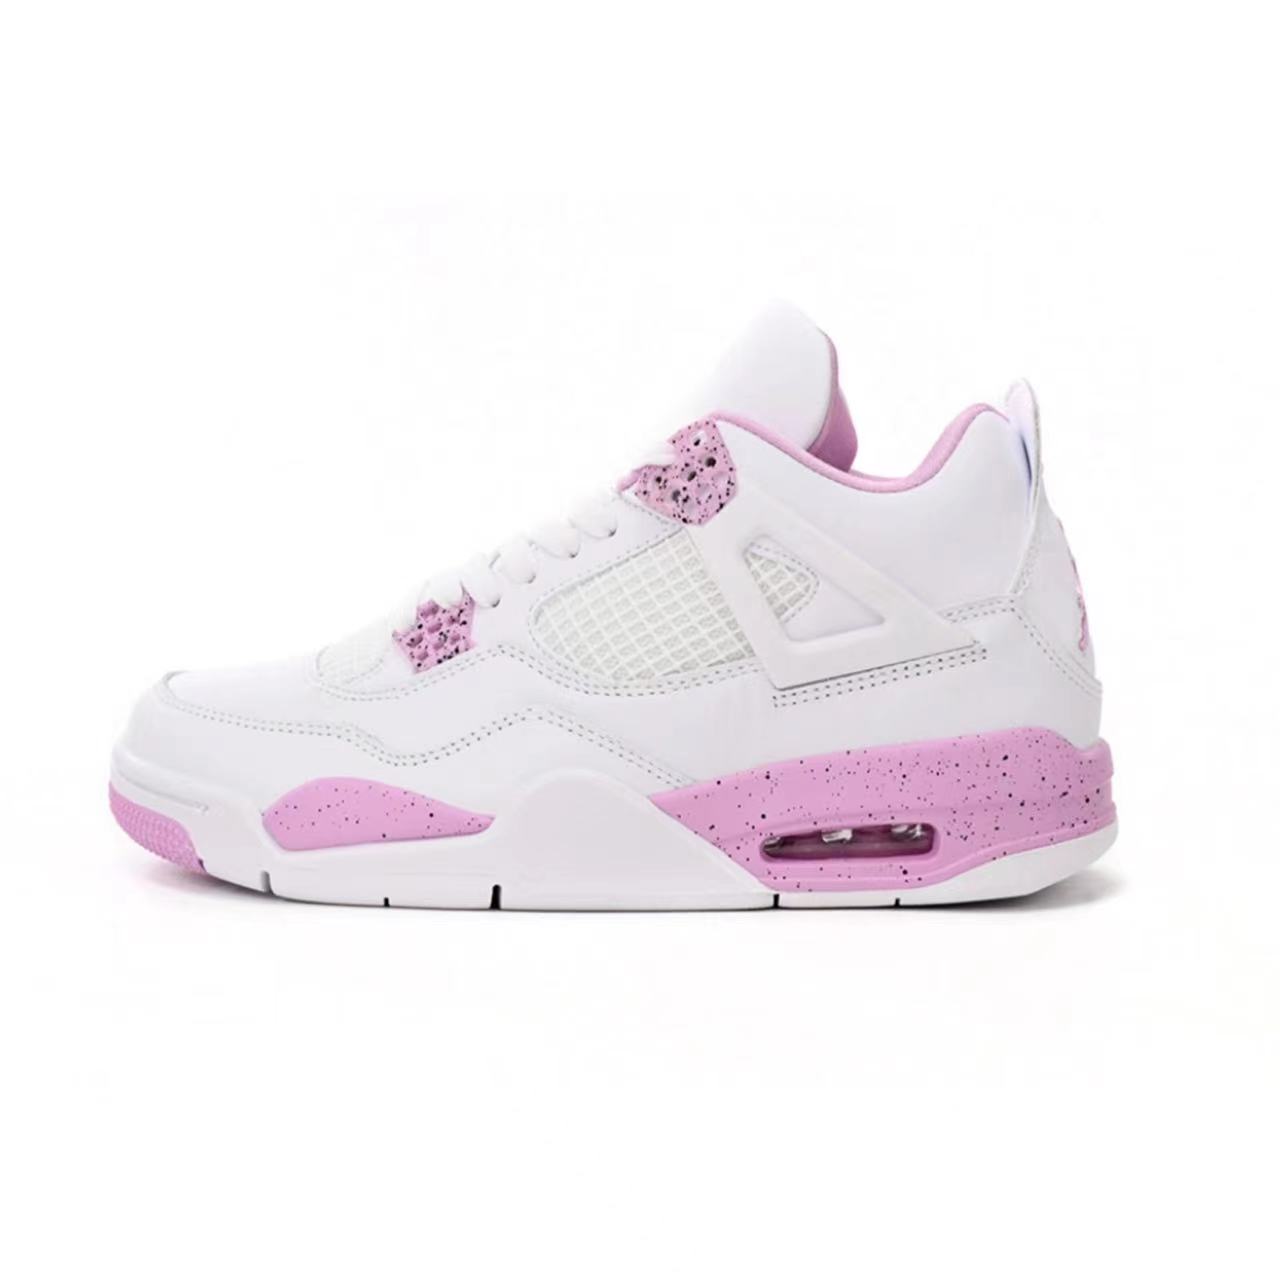 kickx Official Online Store » Jordan 4 Retro Pink White